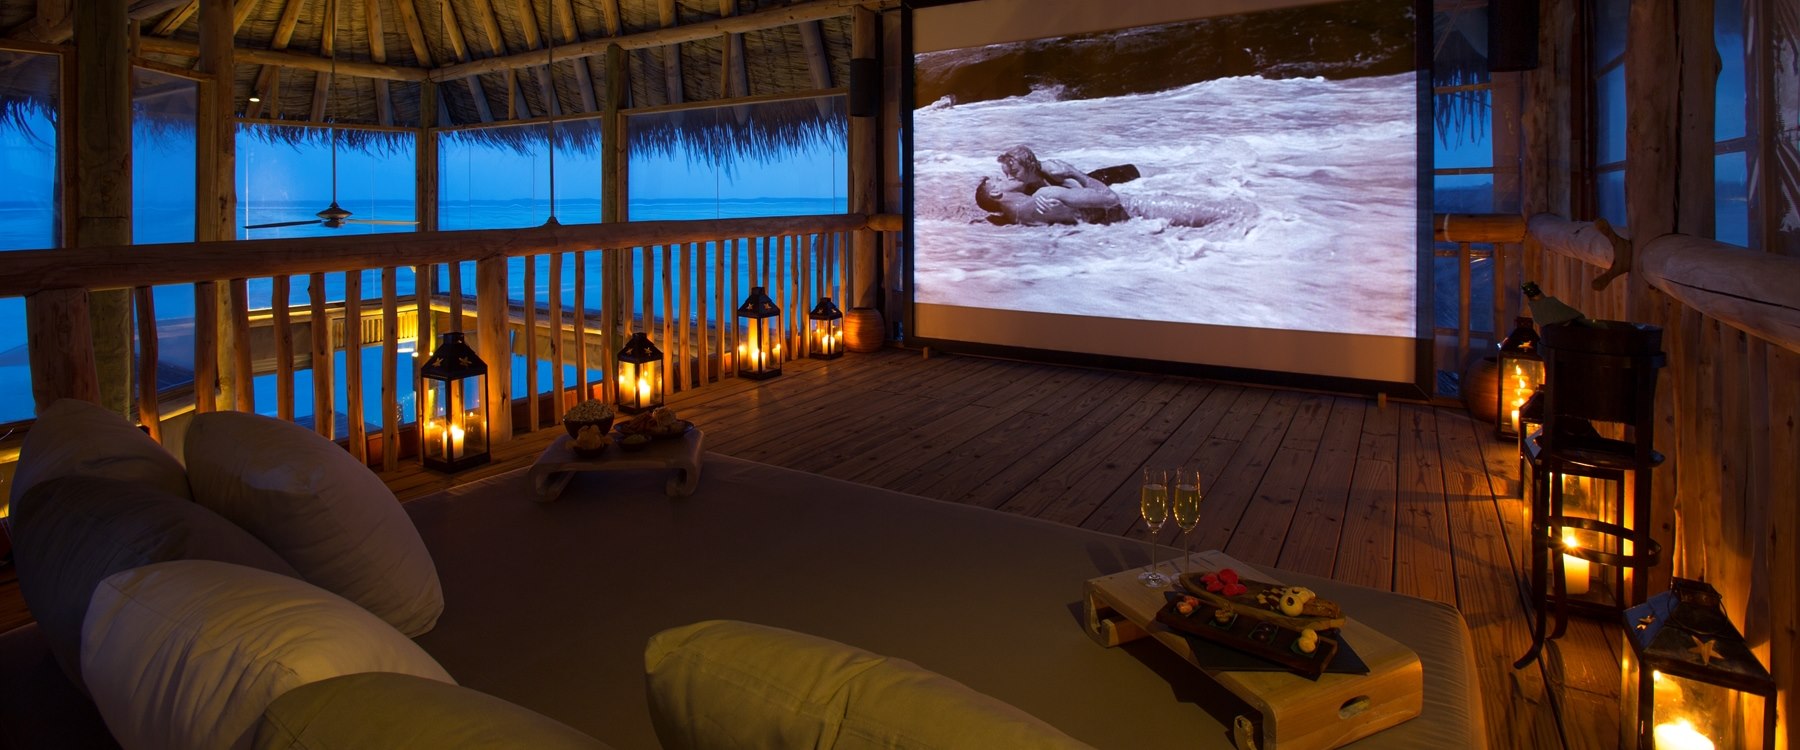 Private Reserve Open Air Cinema at Gili Lankanfushi, Maldives